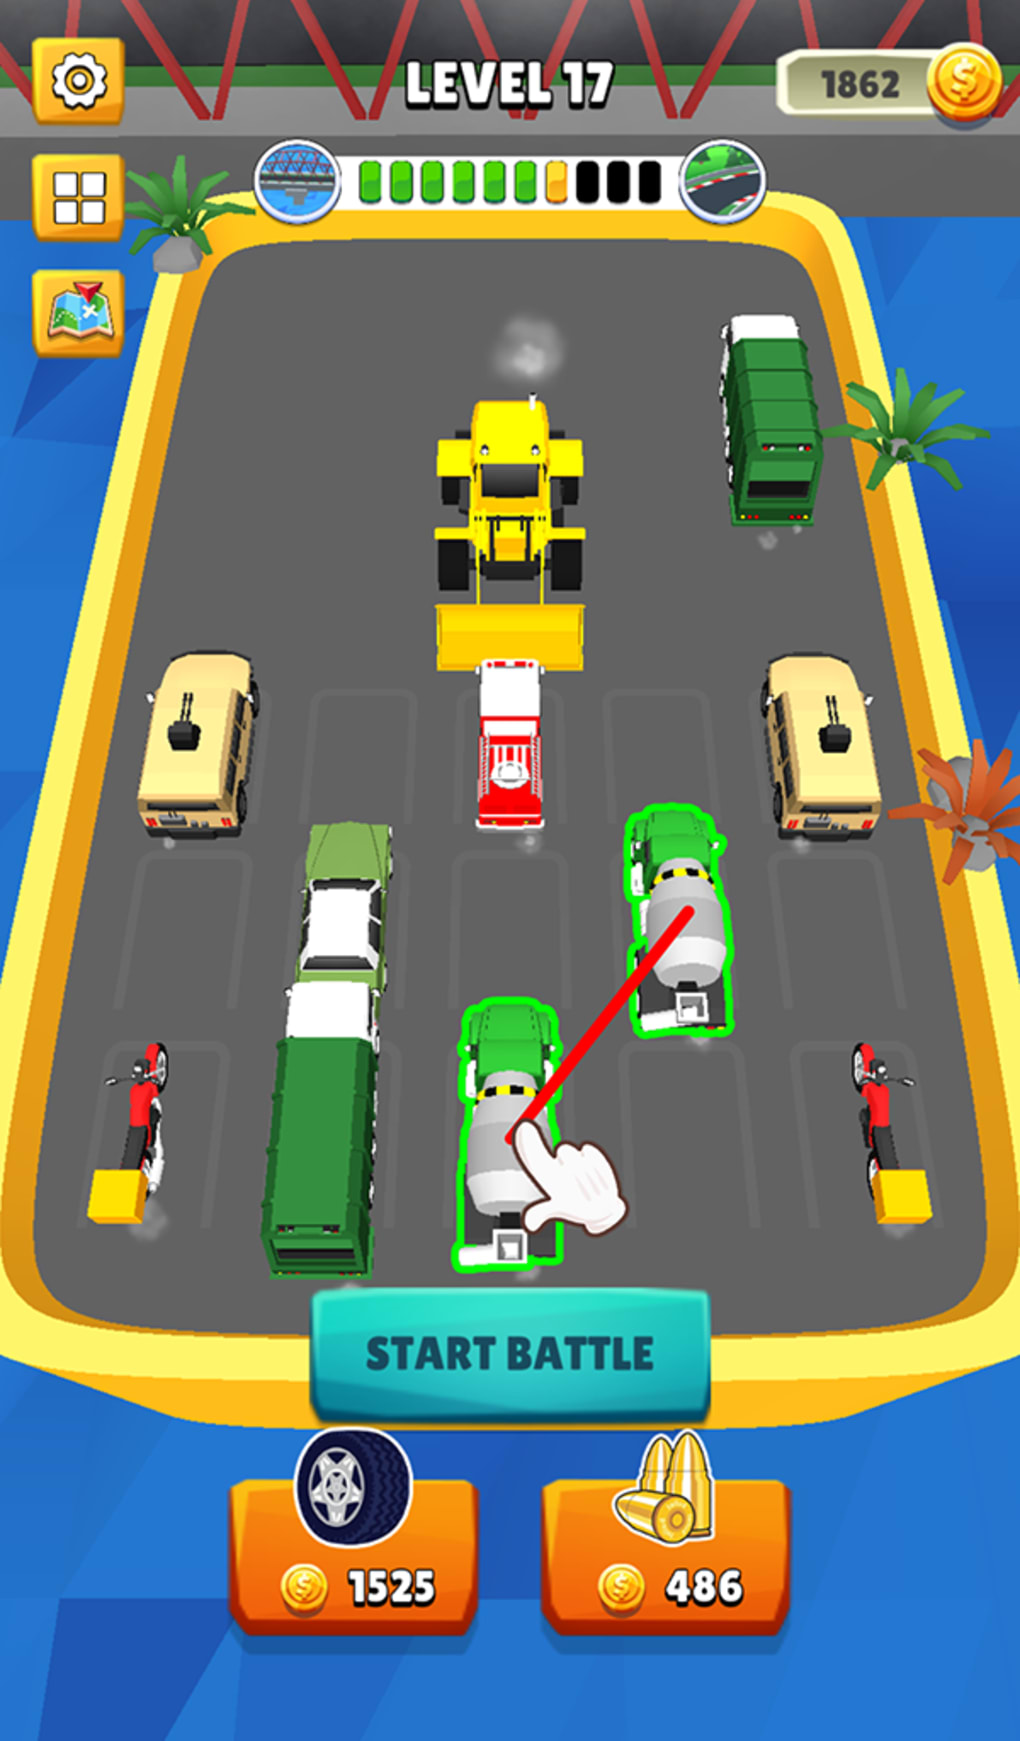 Merge Truck: Monster Truck Evolution Merger game for Android